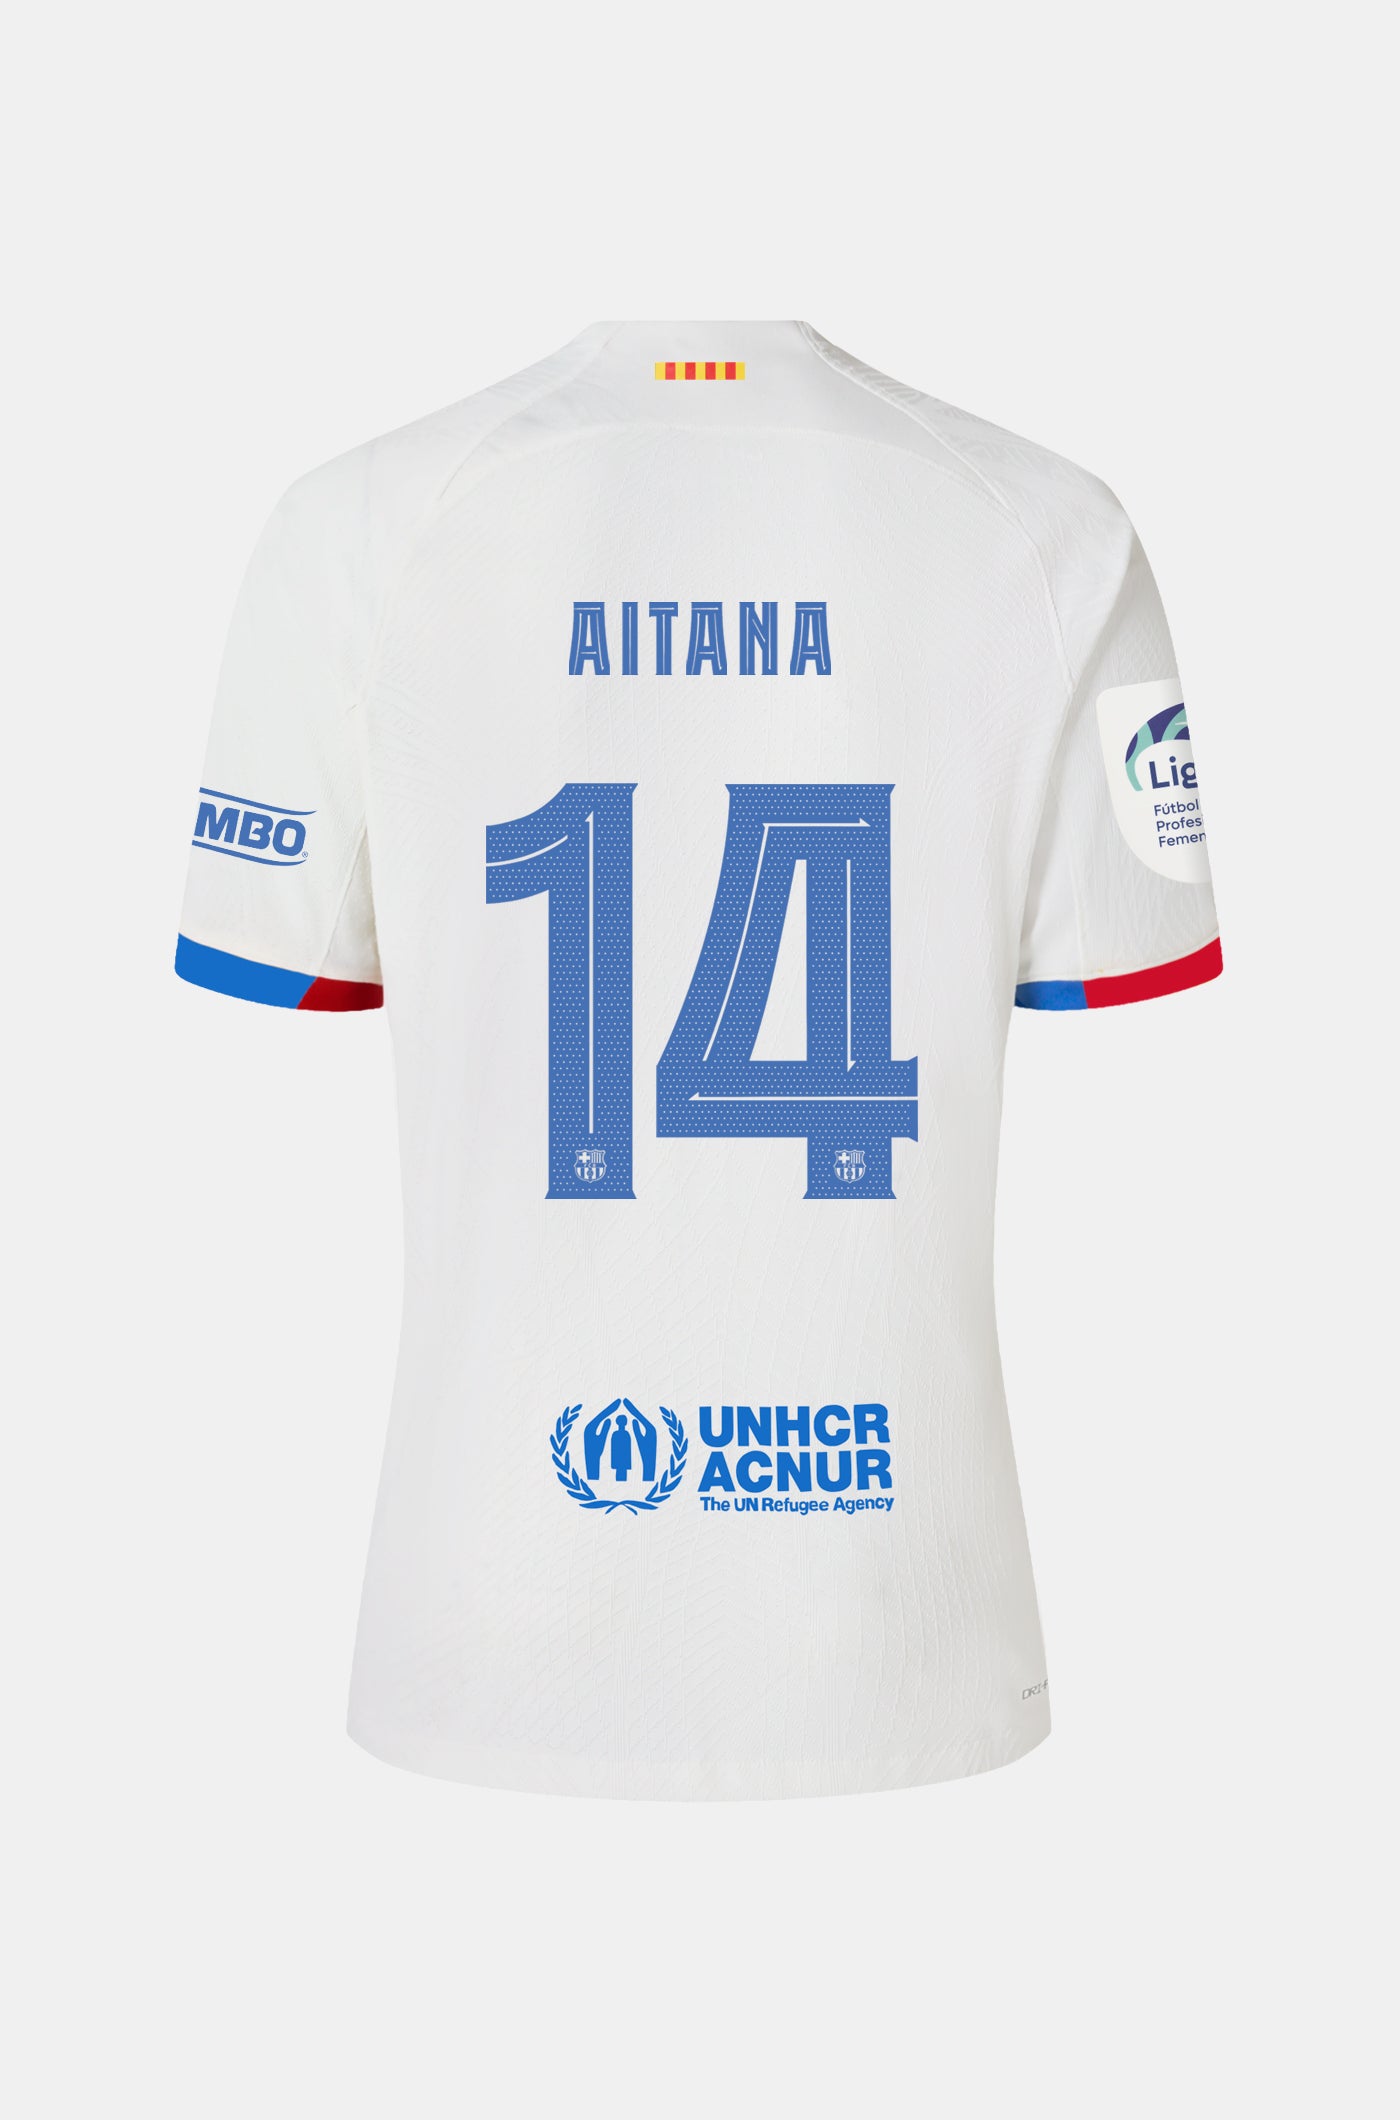 Liga F FC Barcelona away Shirt 23/24 Player’s Edition - AITANA